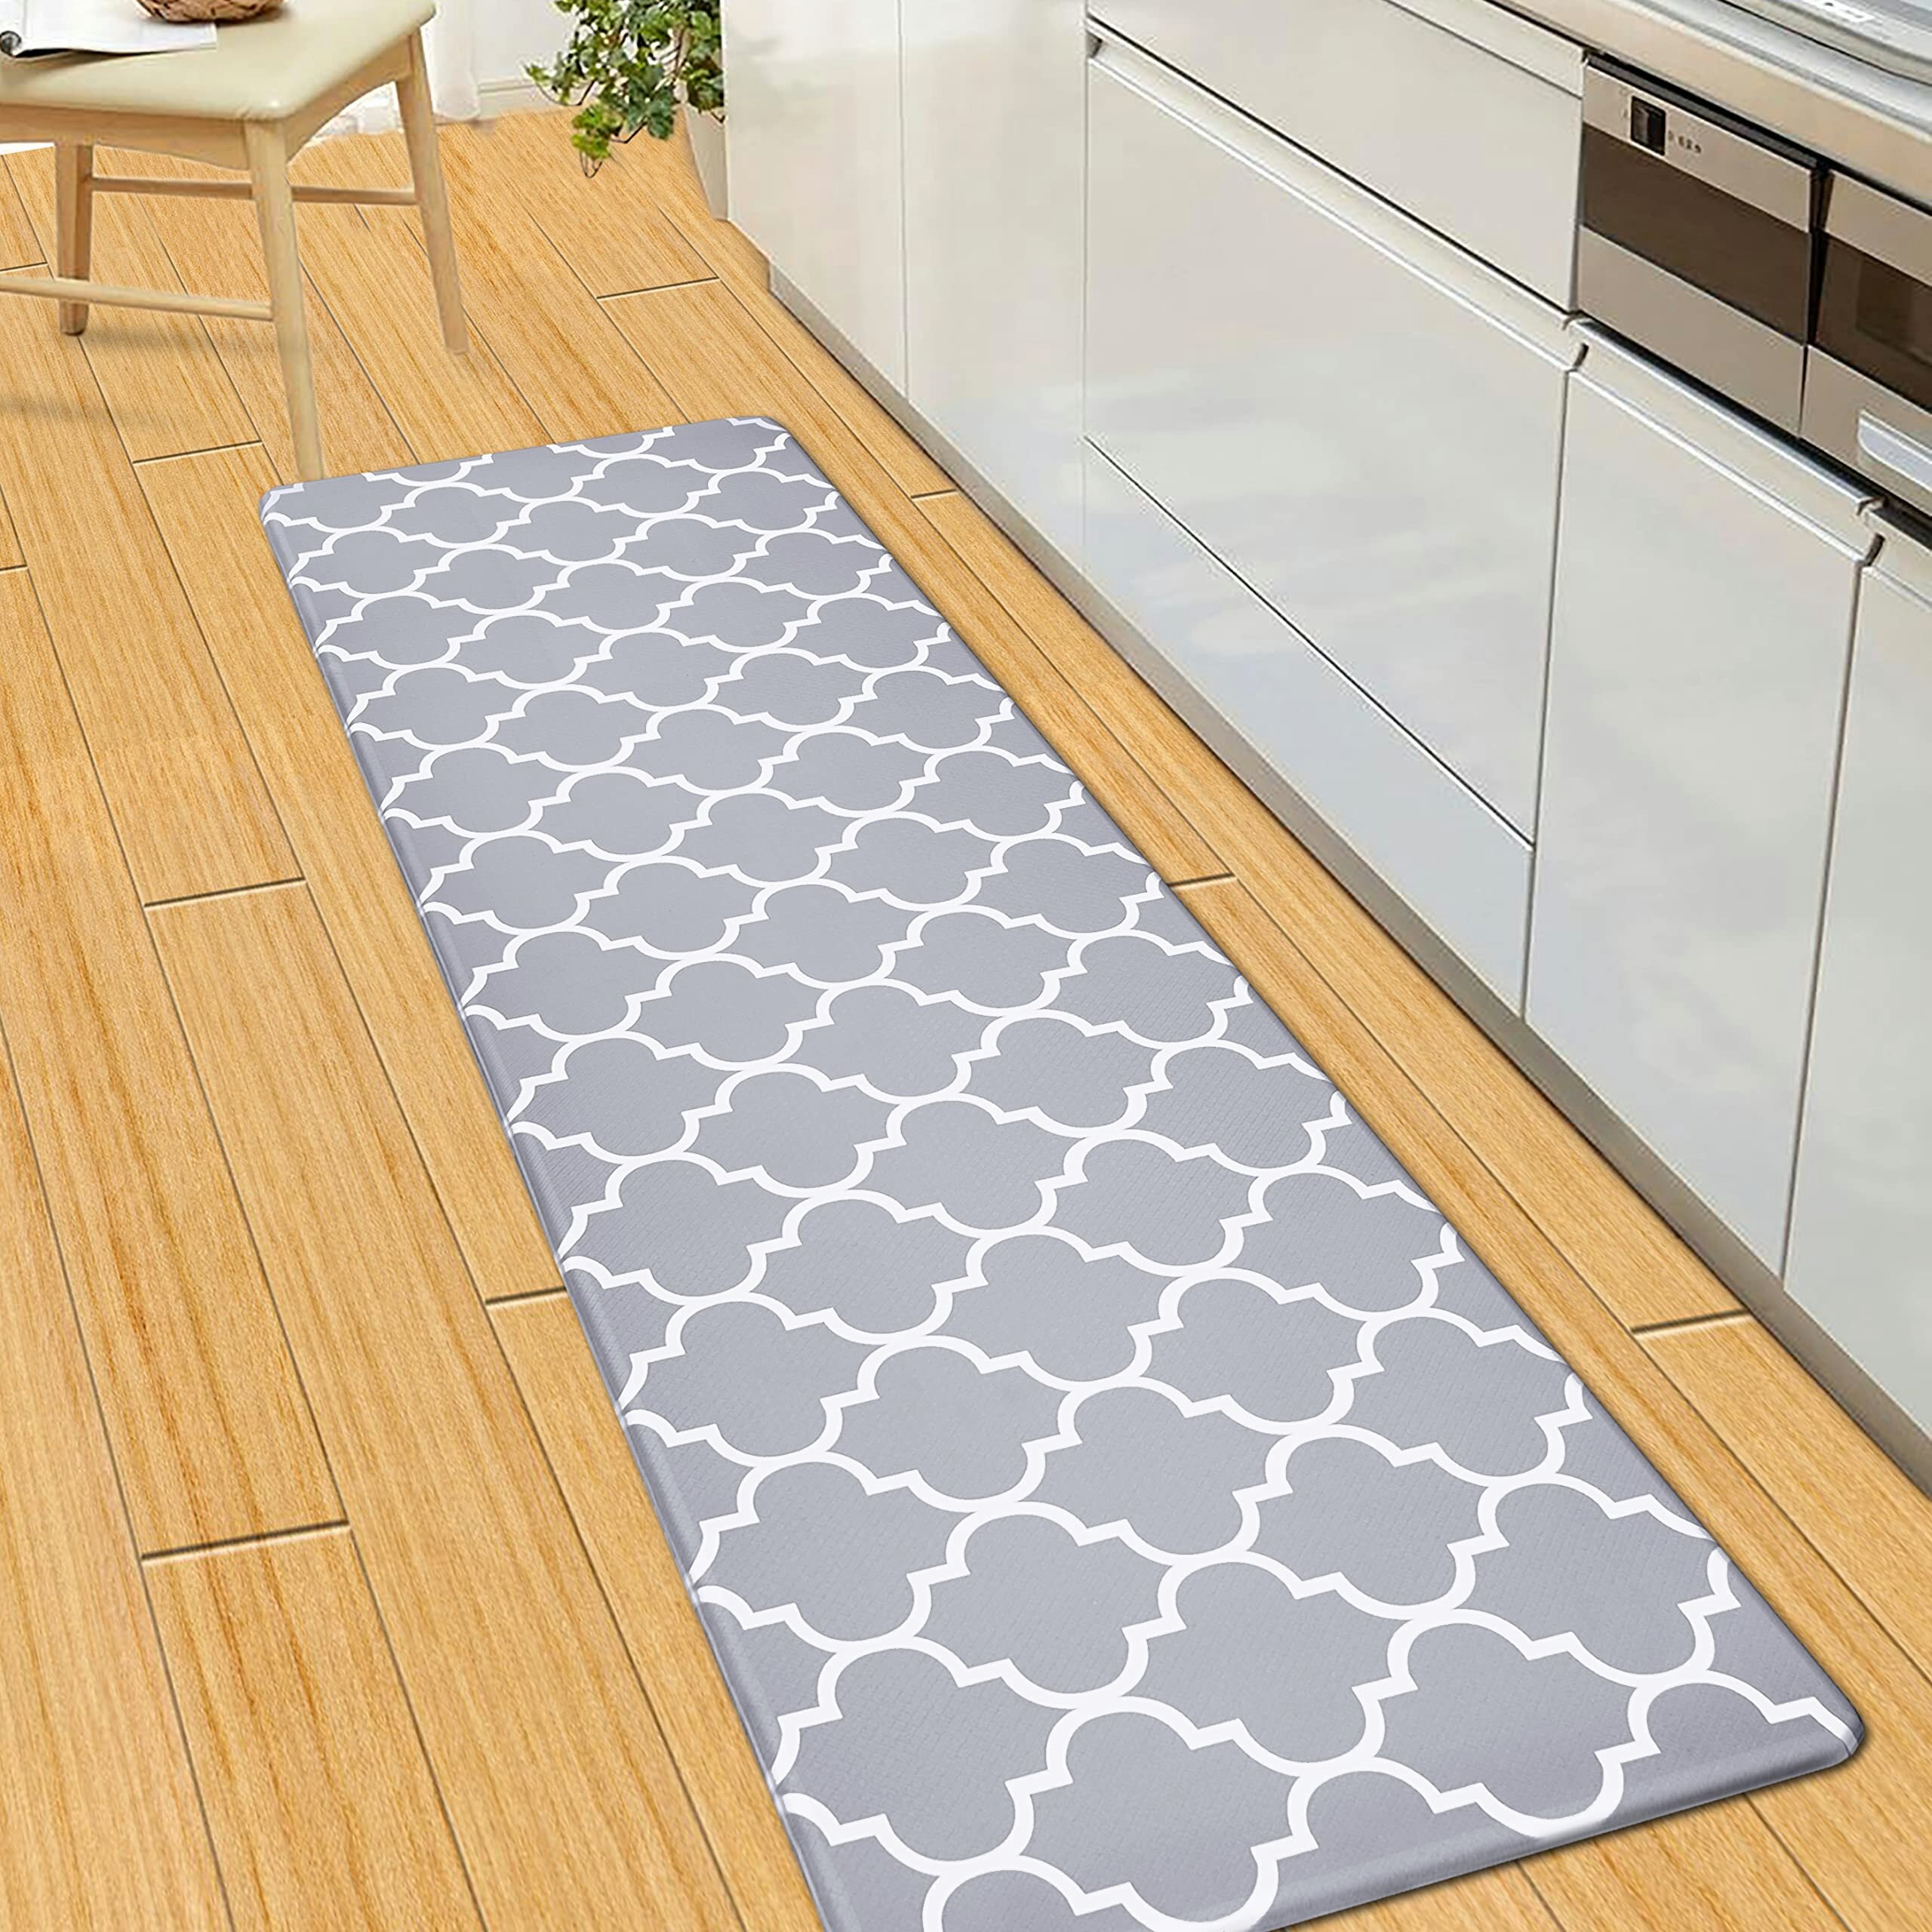 waterproof and anti-fatigue pvc floor mat Laundry room rugs